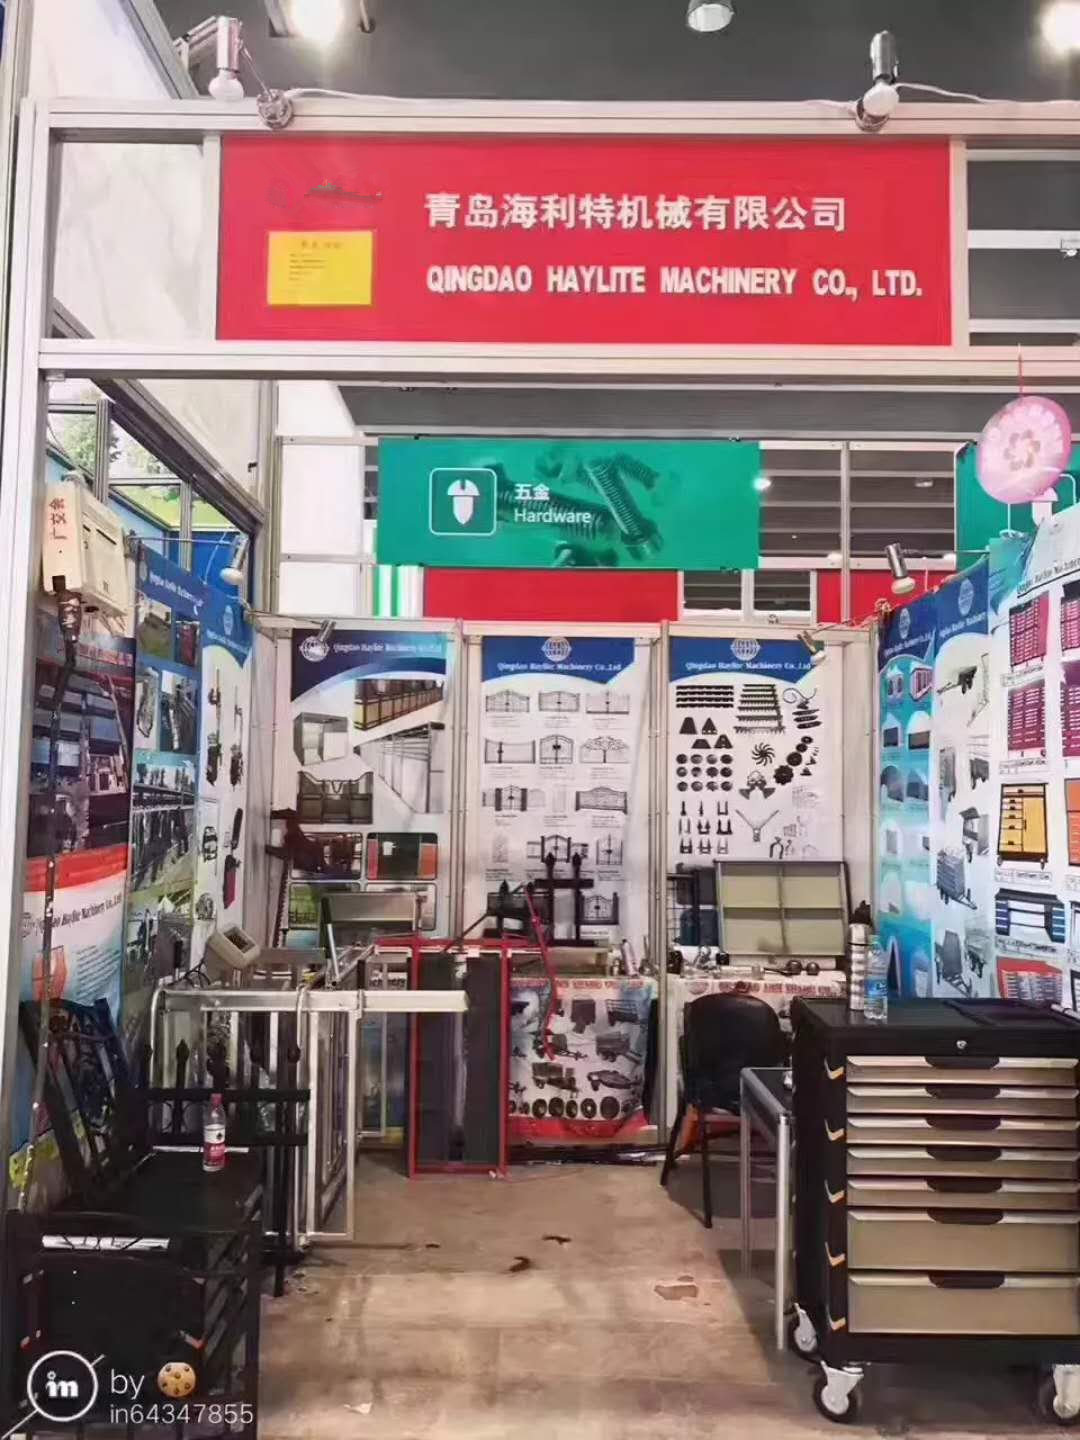 Qingdao Haylite Machinery Co., Ltd